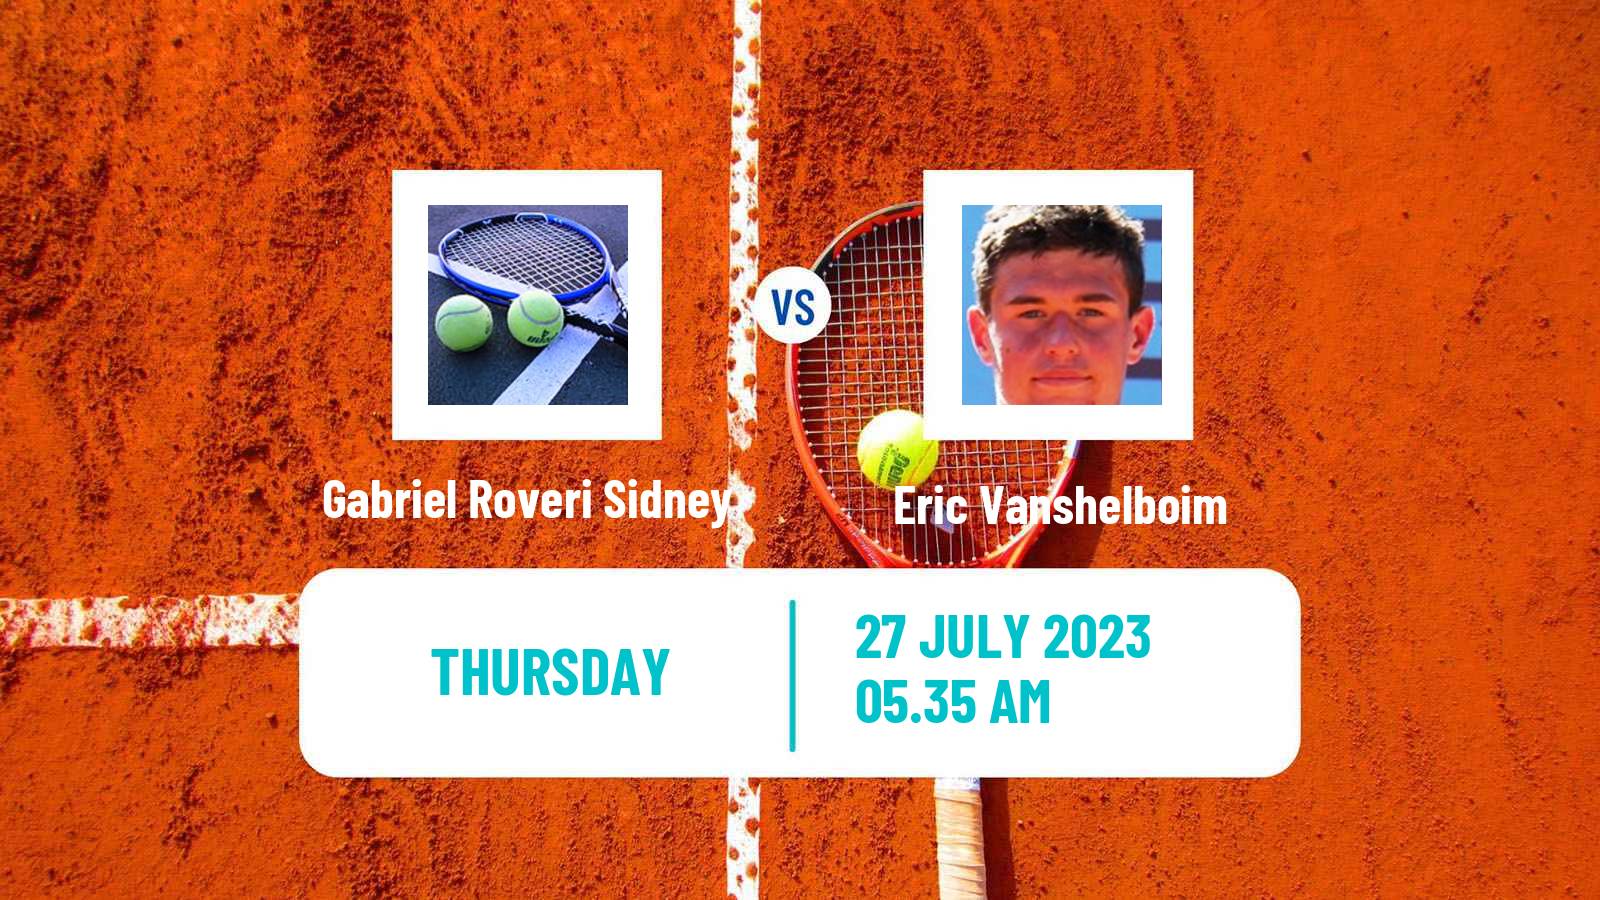 Tennis ITF M25 Denia Men Gabriel Roveri Sidney - Eric Vanshelboim